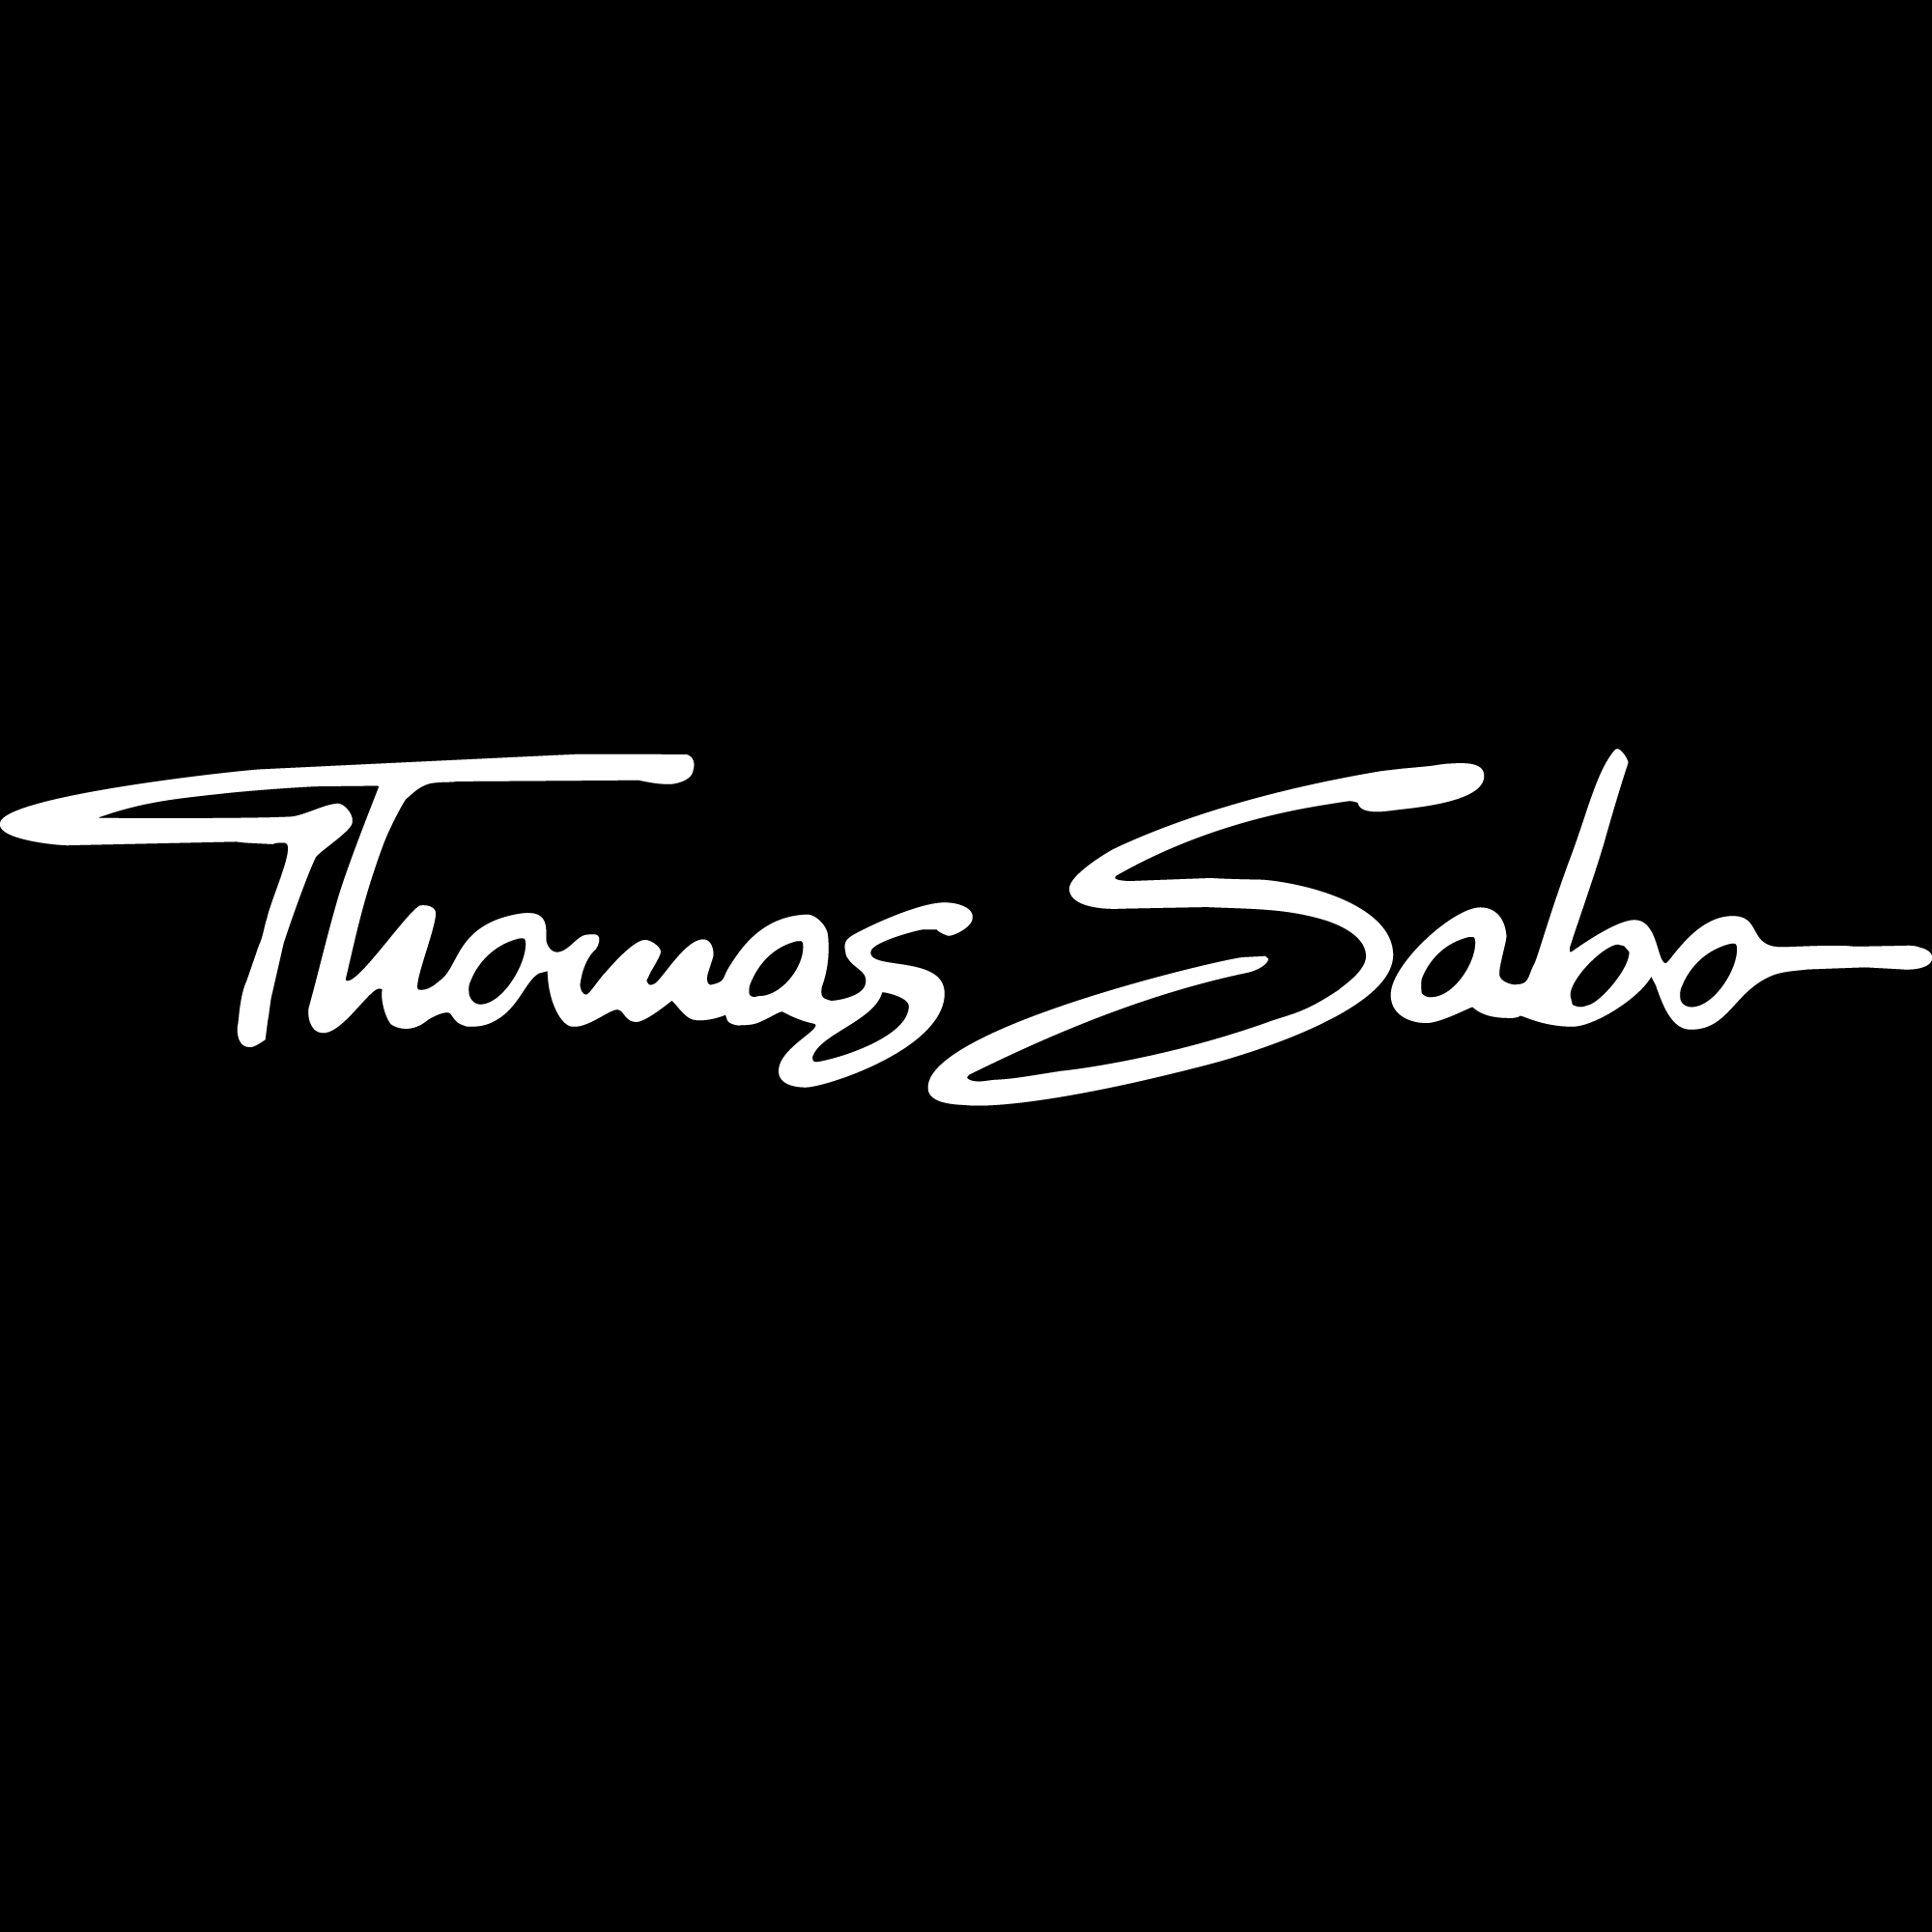 THOMAS SABO in München - Logo